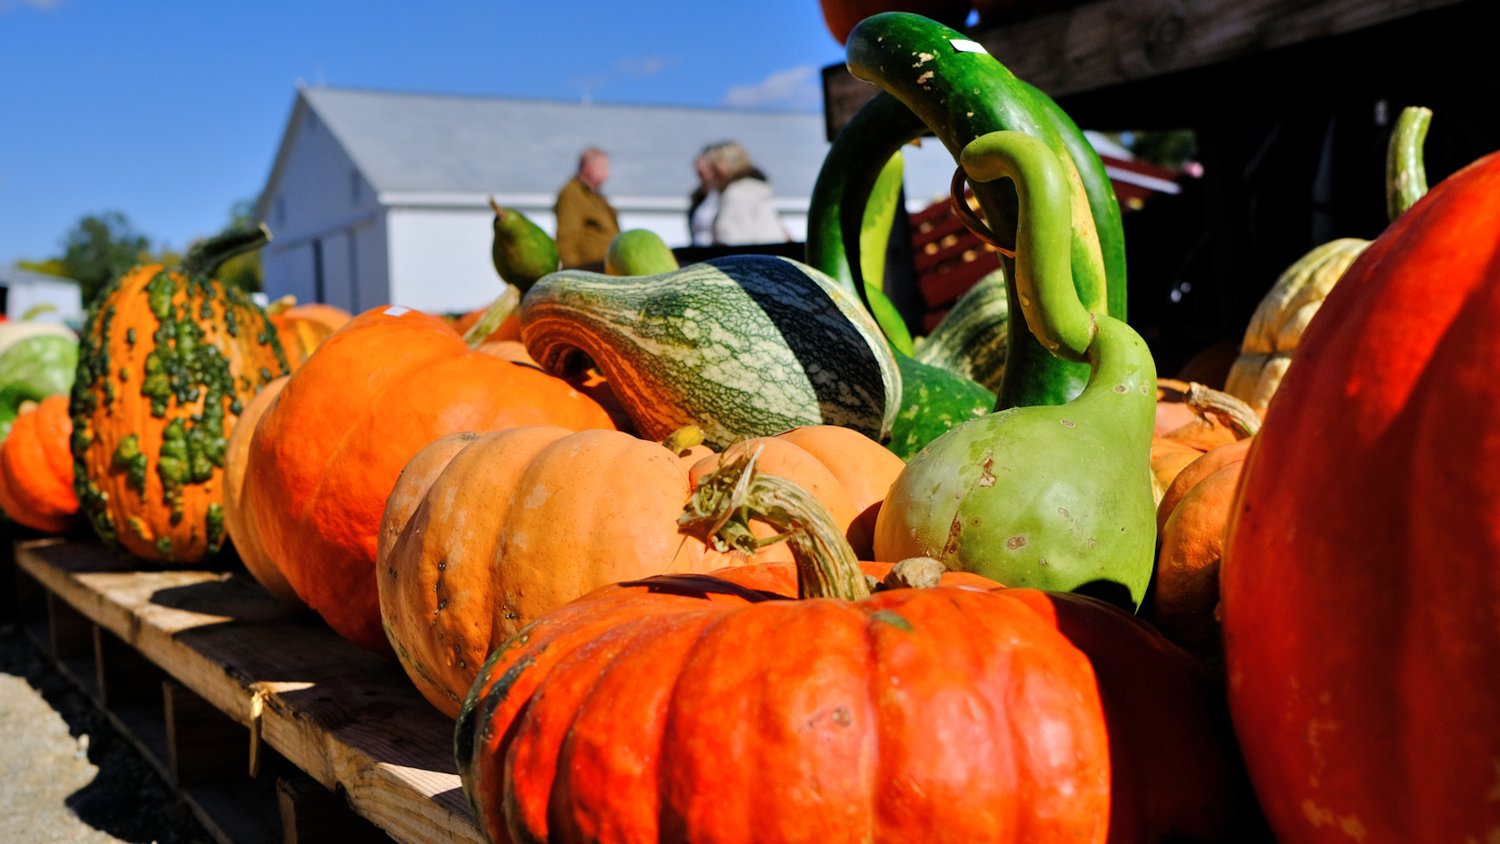 Colorful display of pumpkins and squash.